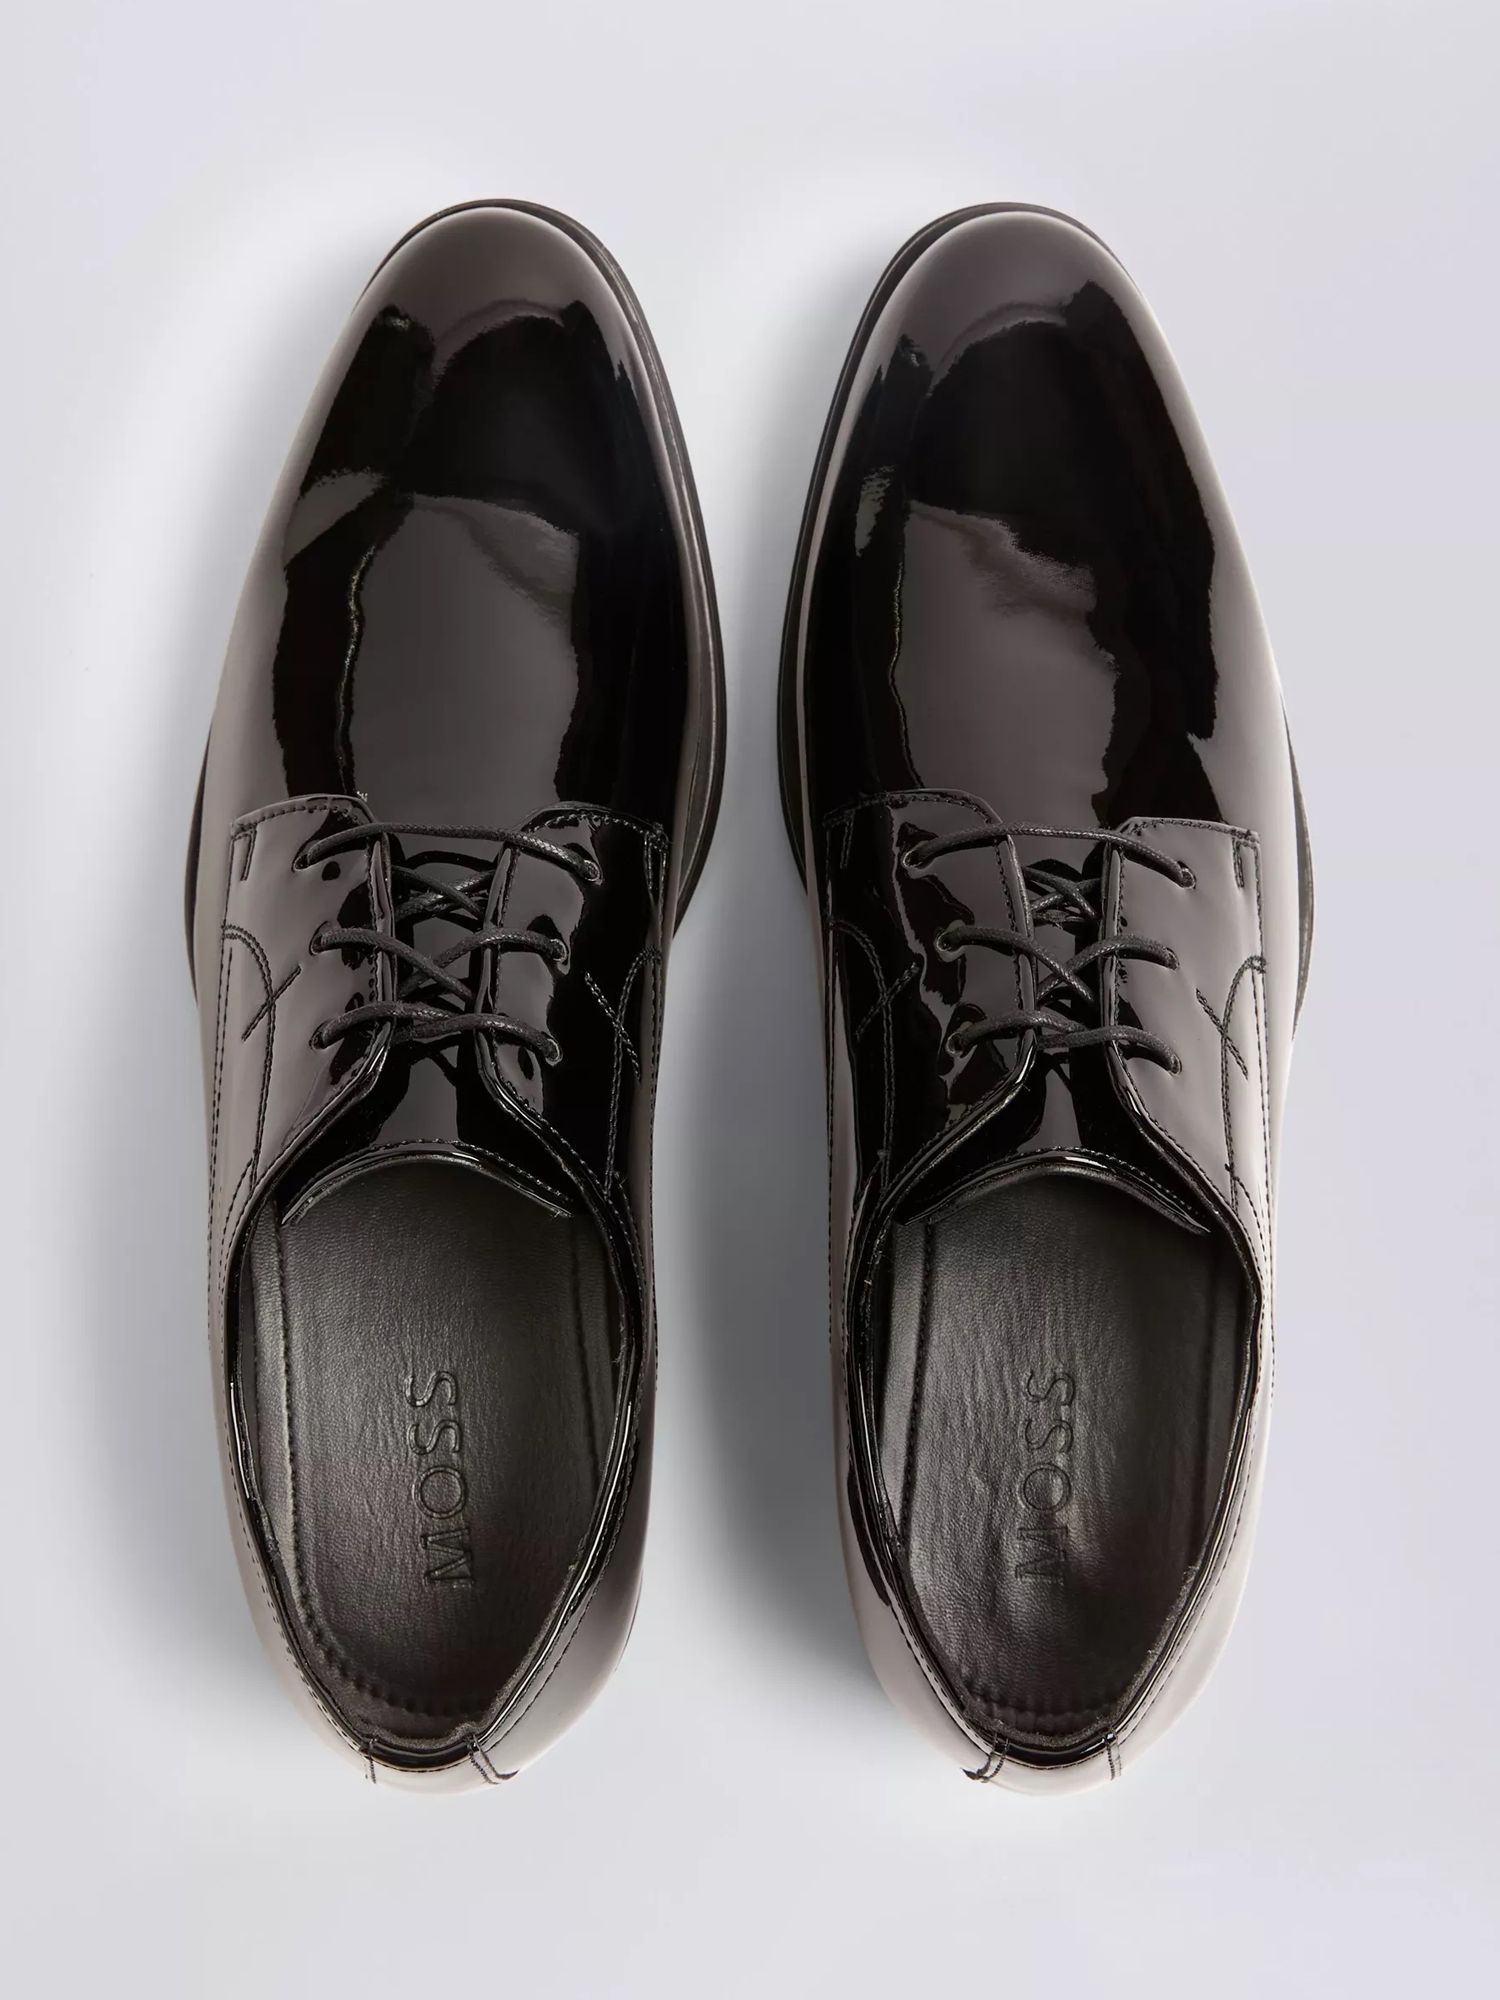 Moss Mayfair Patent Dress Shoes, Black at John Lewis & Partners